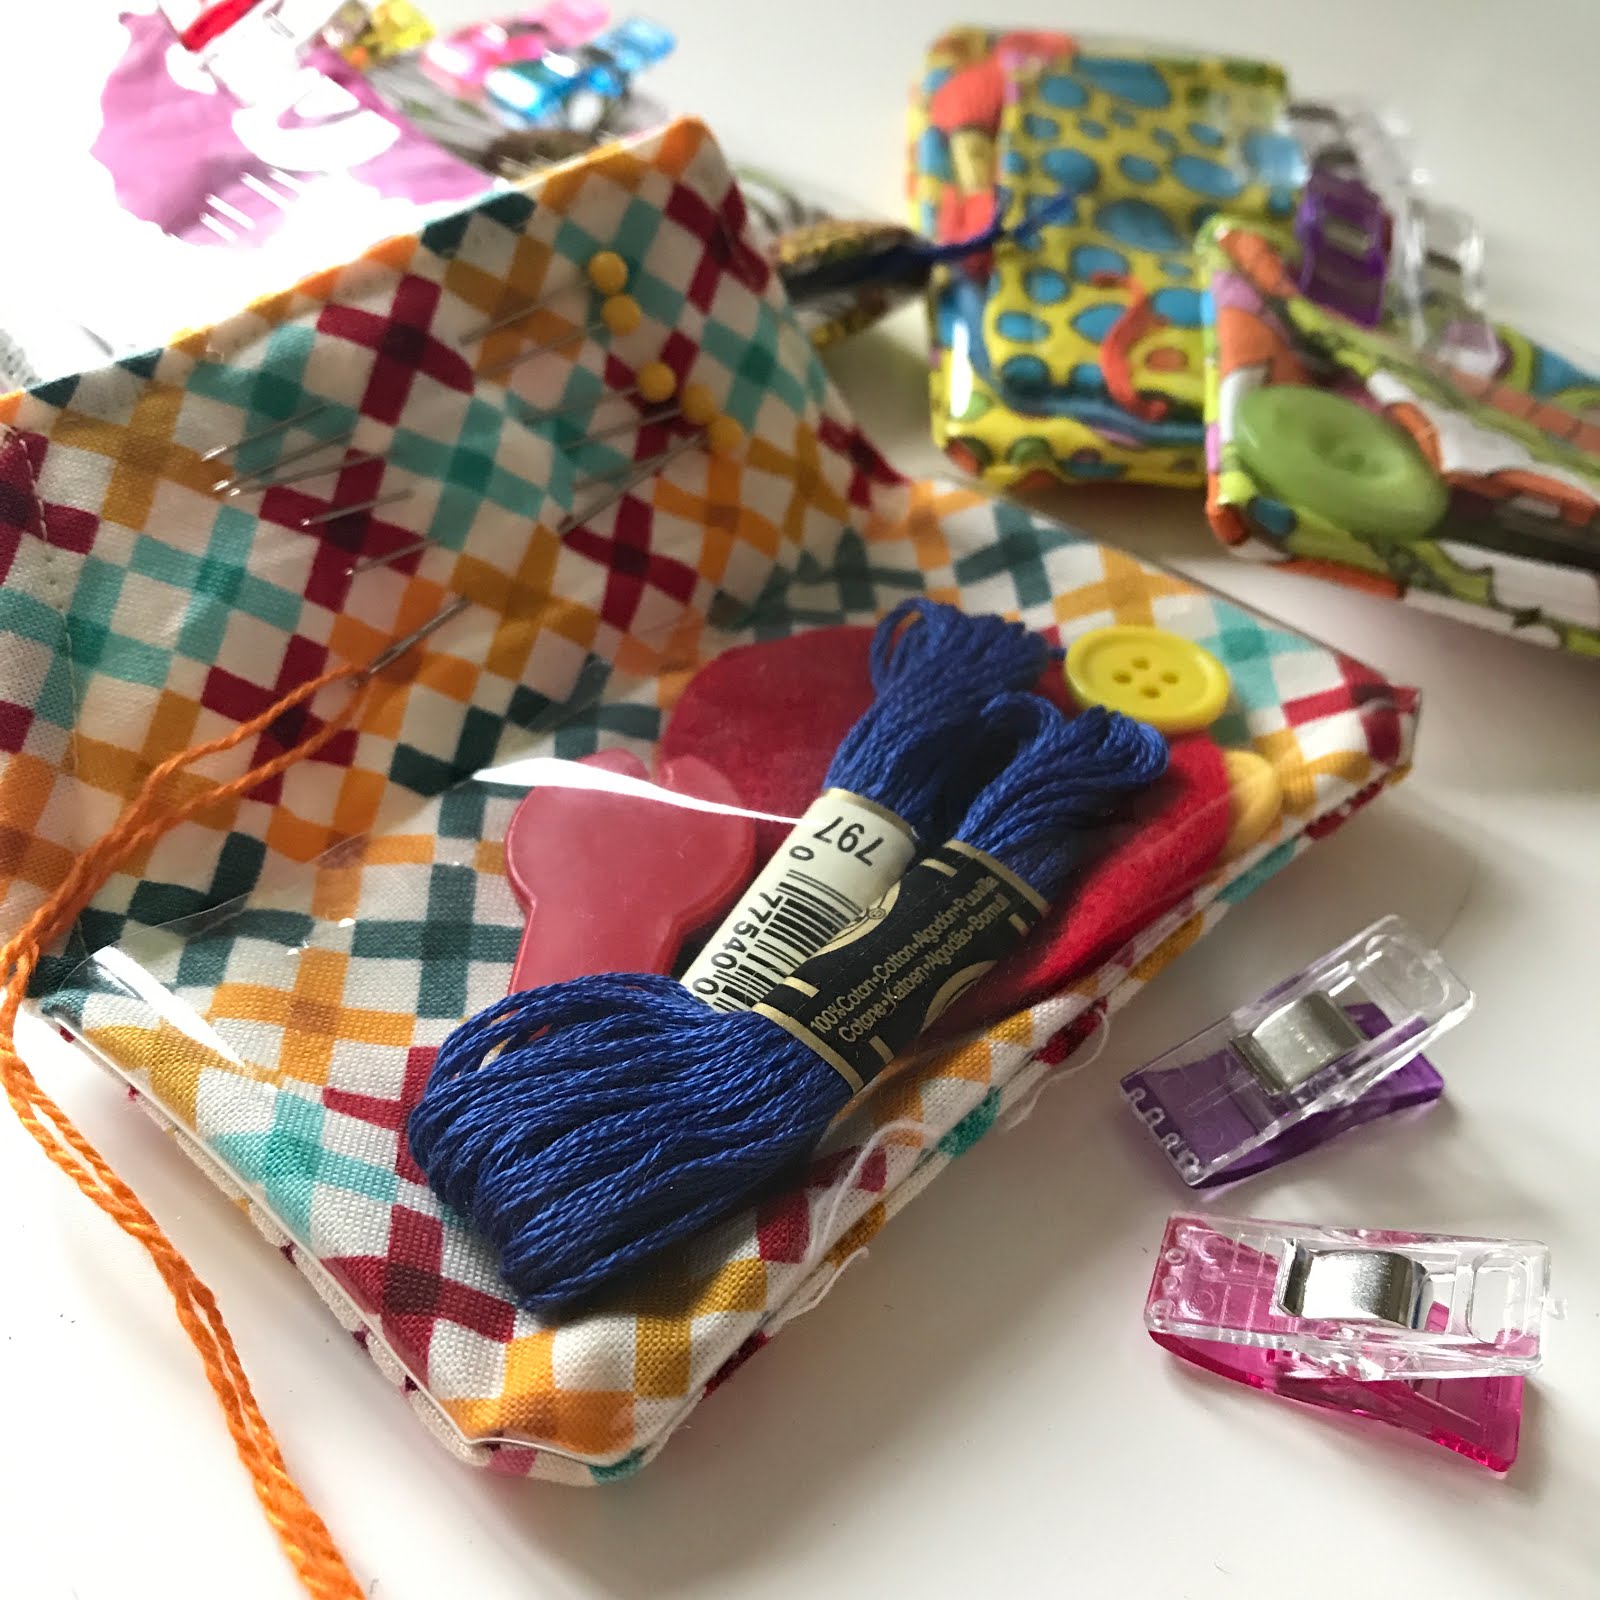 Mini Matisse: Creating a Sewing Kit